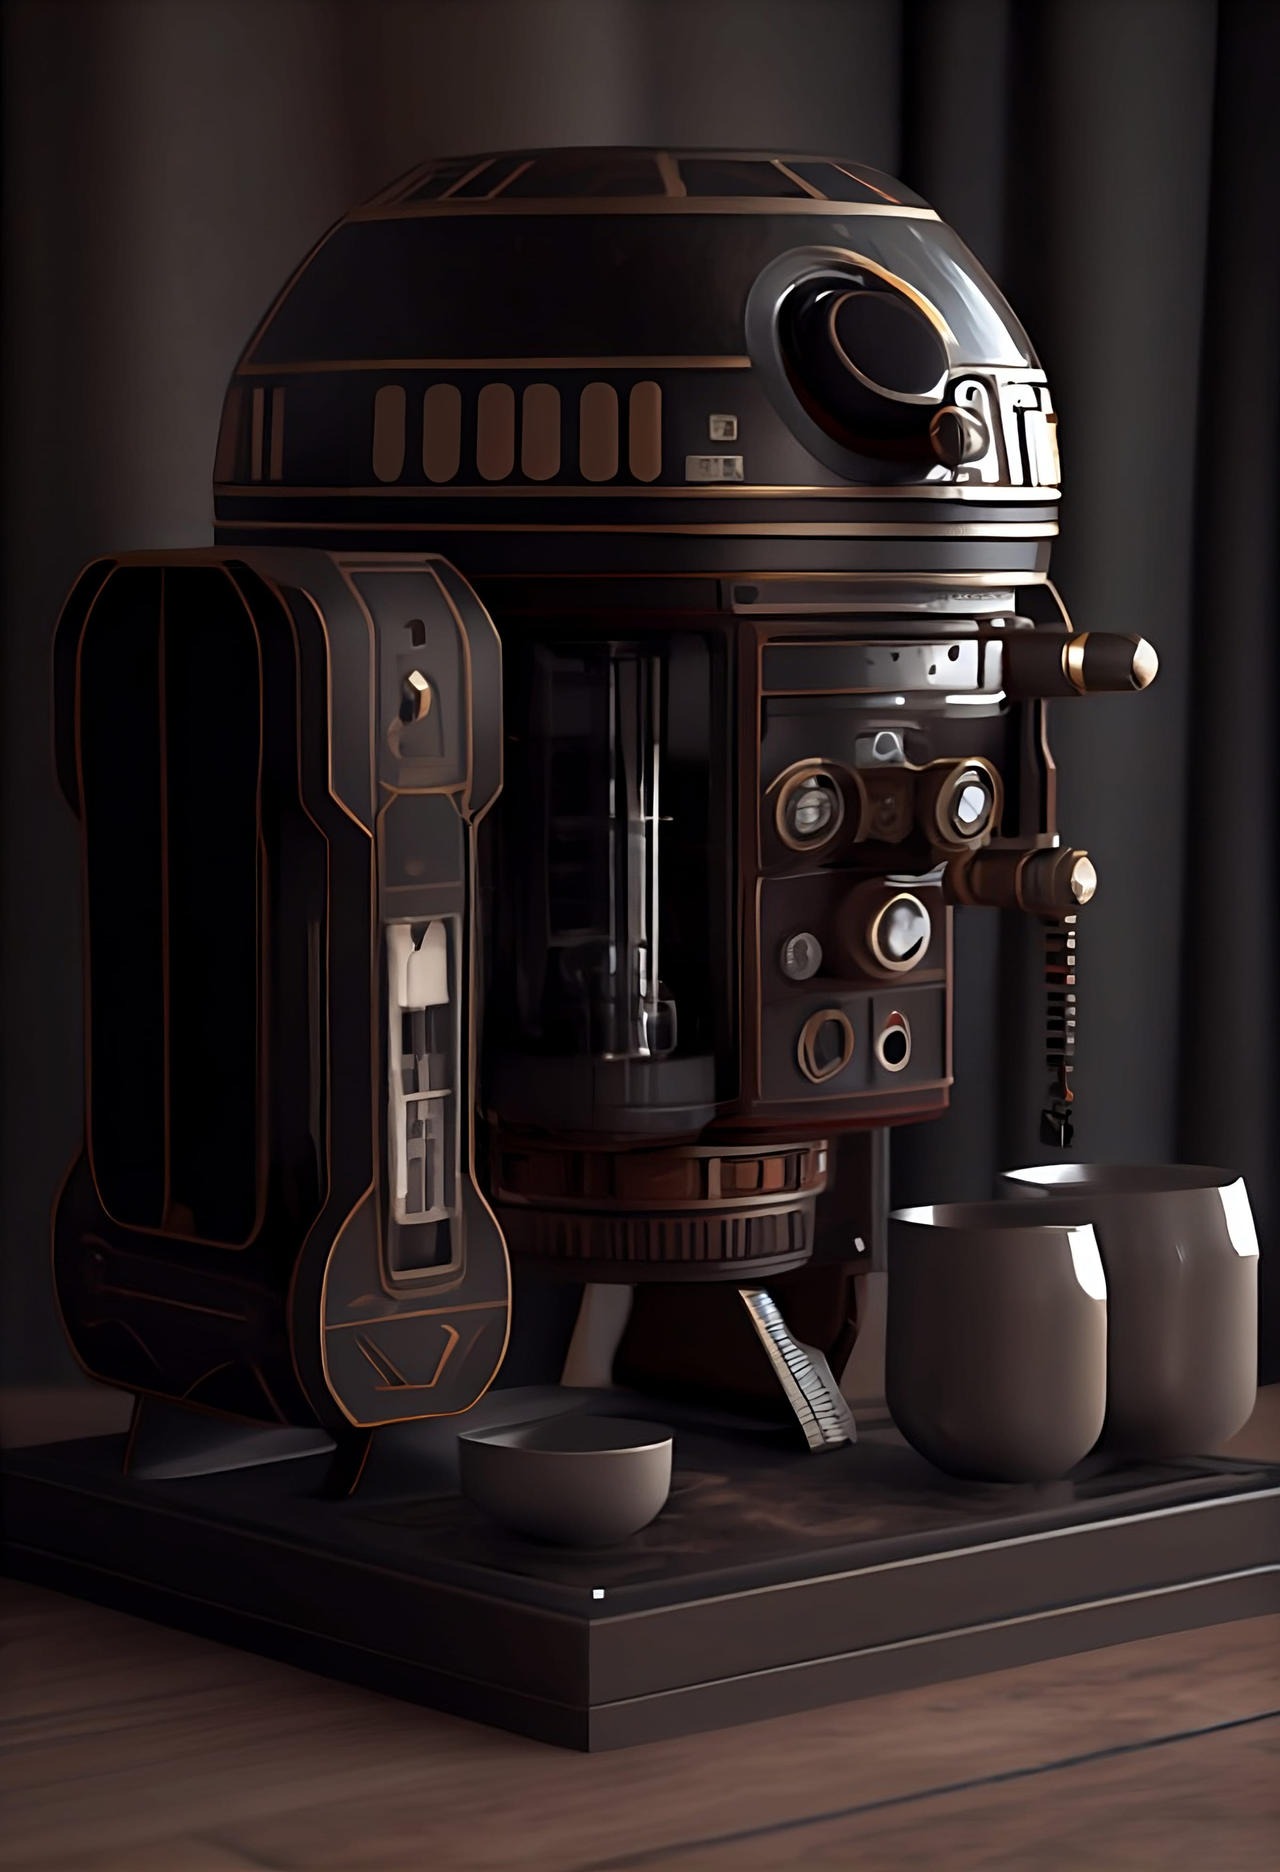 960ml Moka Coffee Machine R2-d2 Cartoon Star Wars Robot Office